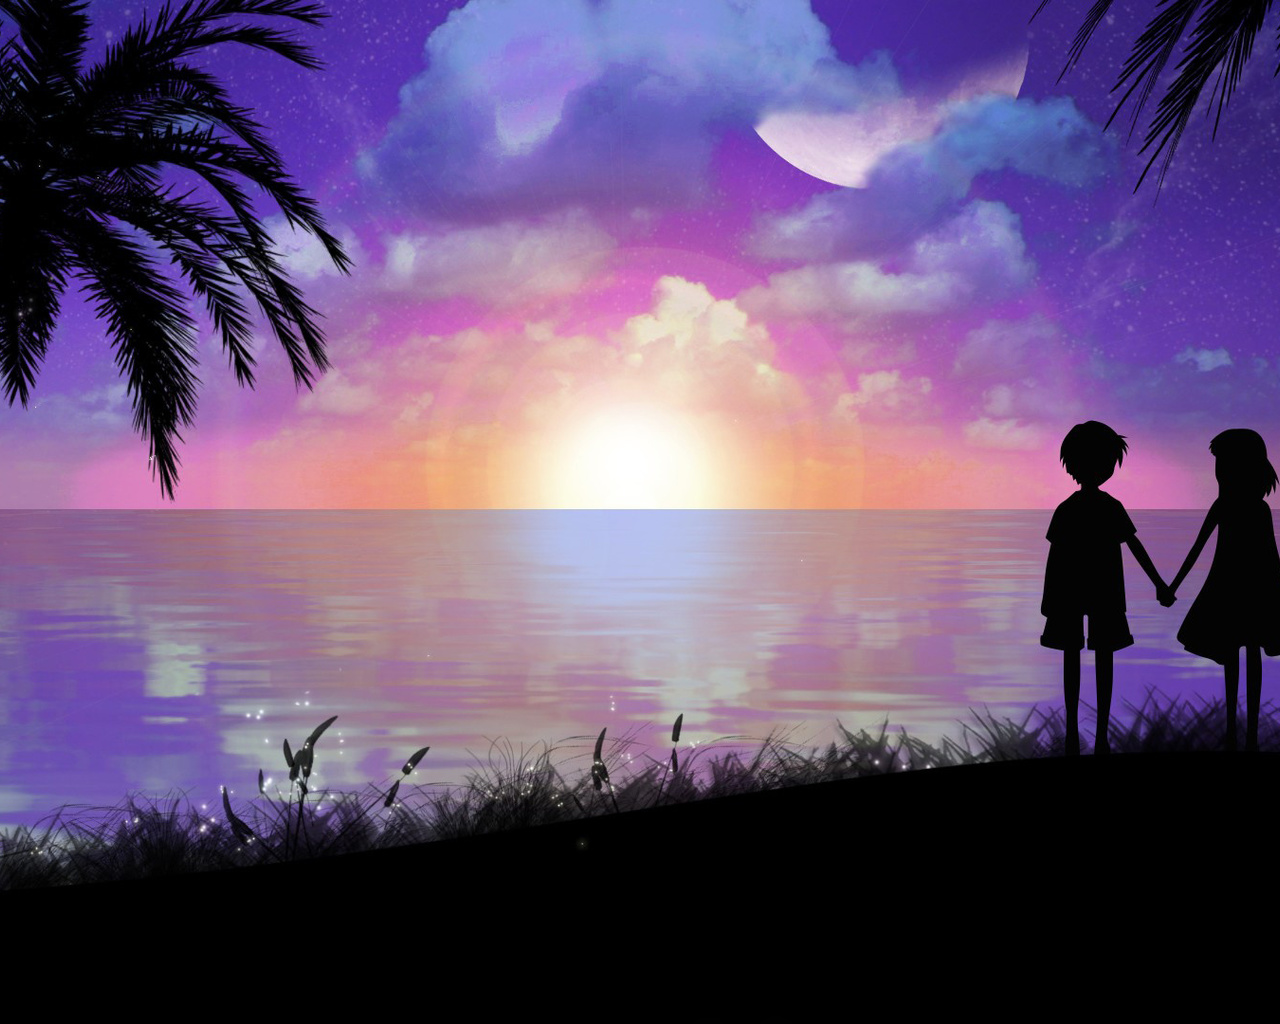 girl, palm trees, boy, art, toyboj, shore, sea, silhouettes, the evening, landscape